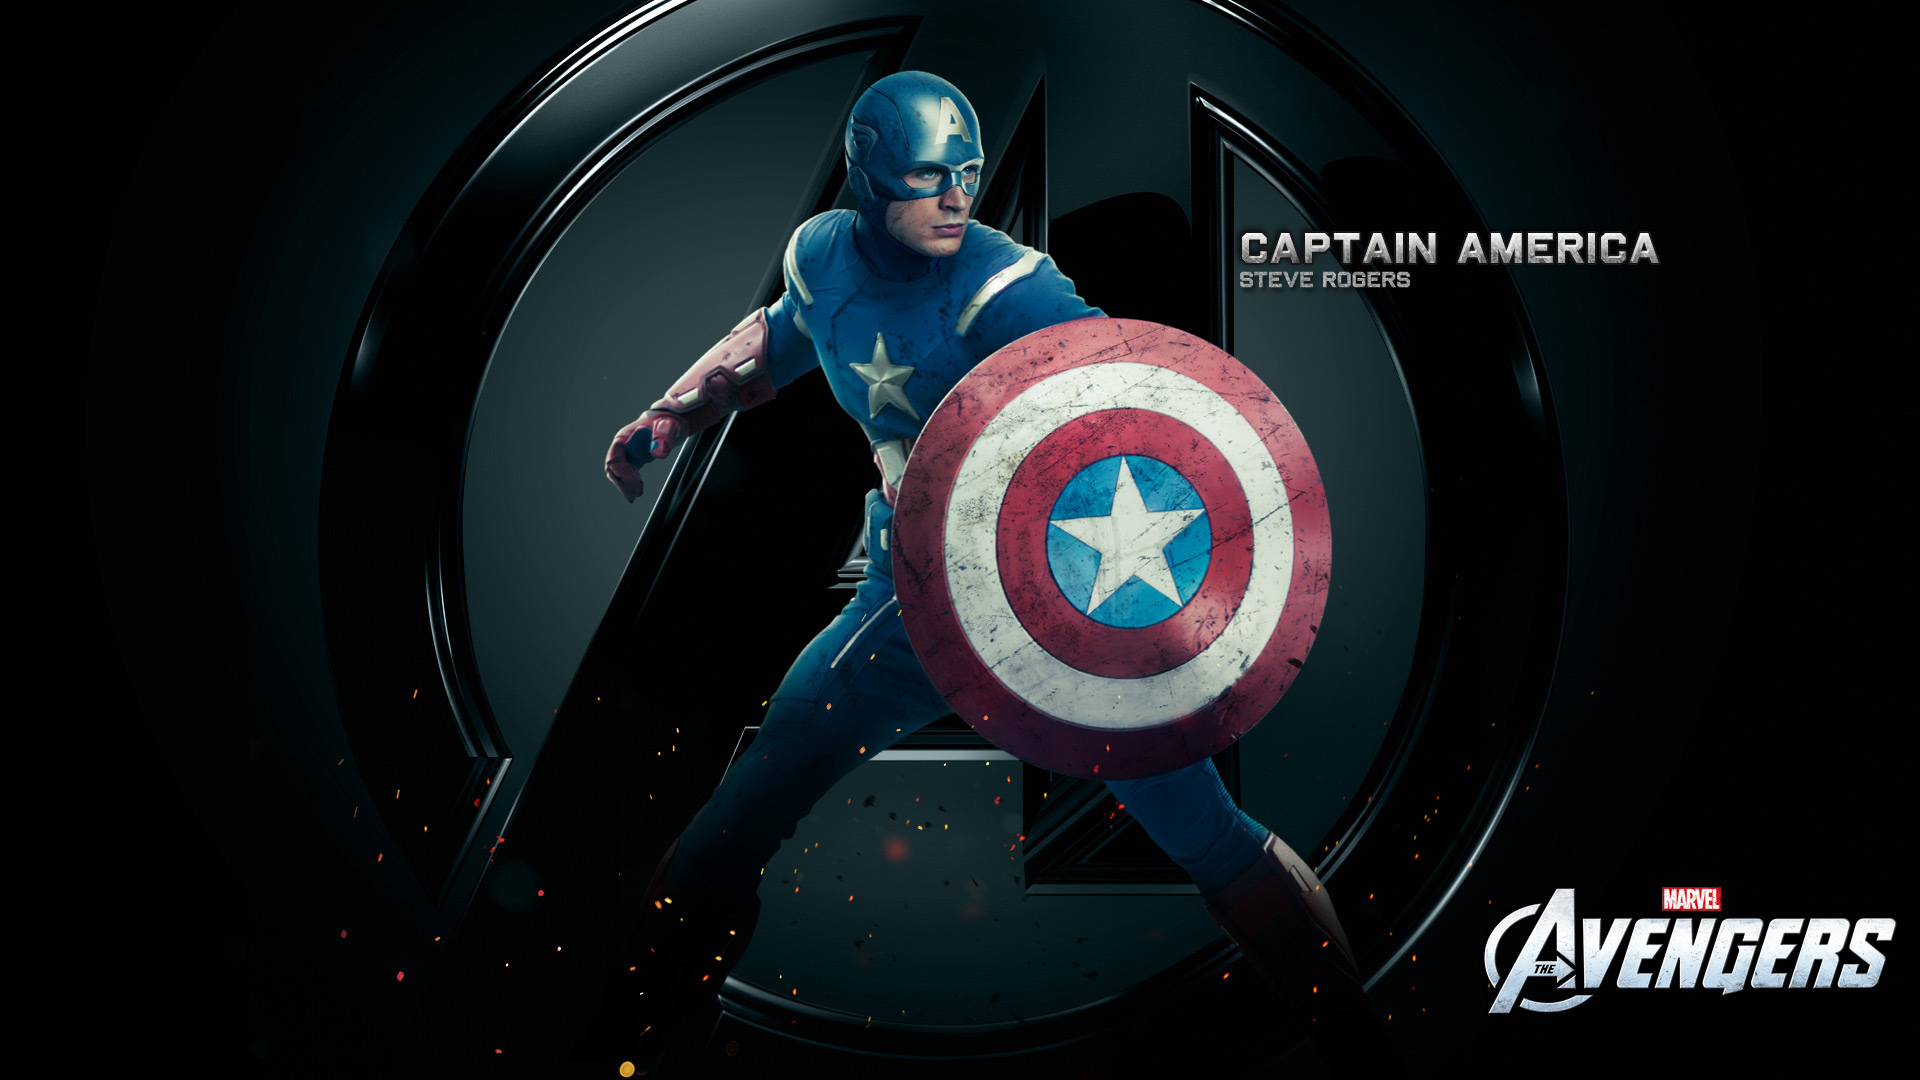 Captain America Steve Rogers Wallpaper - Wallpaper, High Definition, High Quality ...1920 x 1080